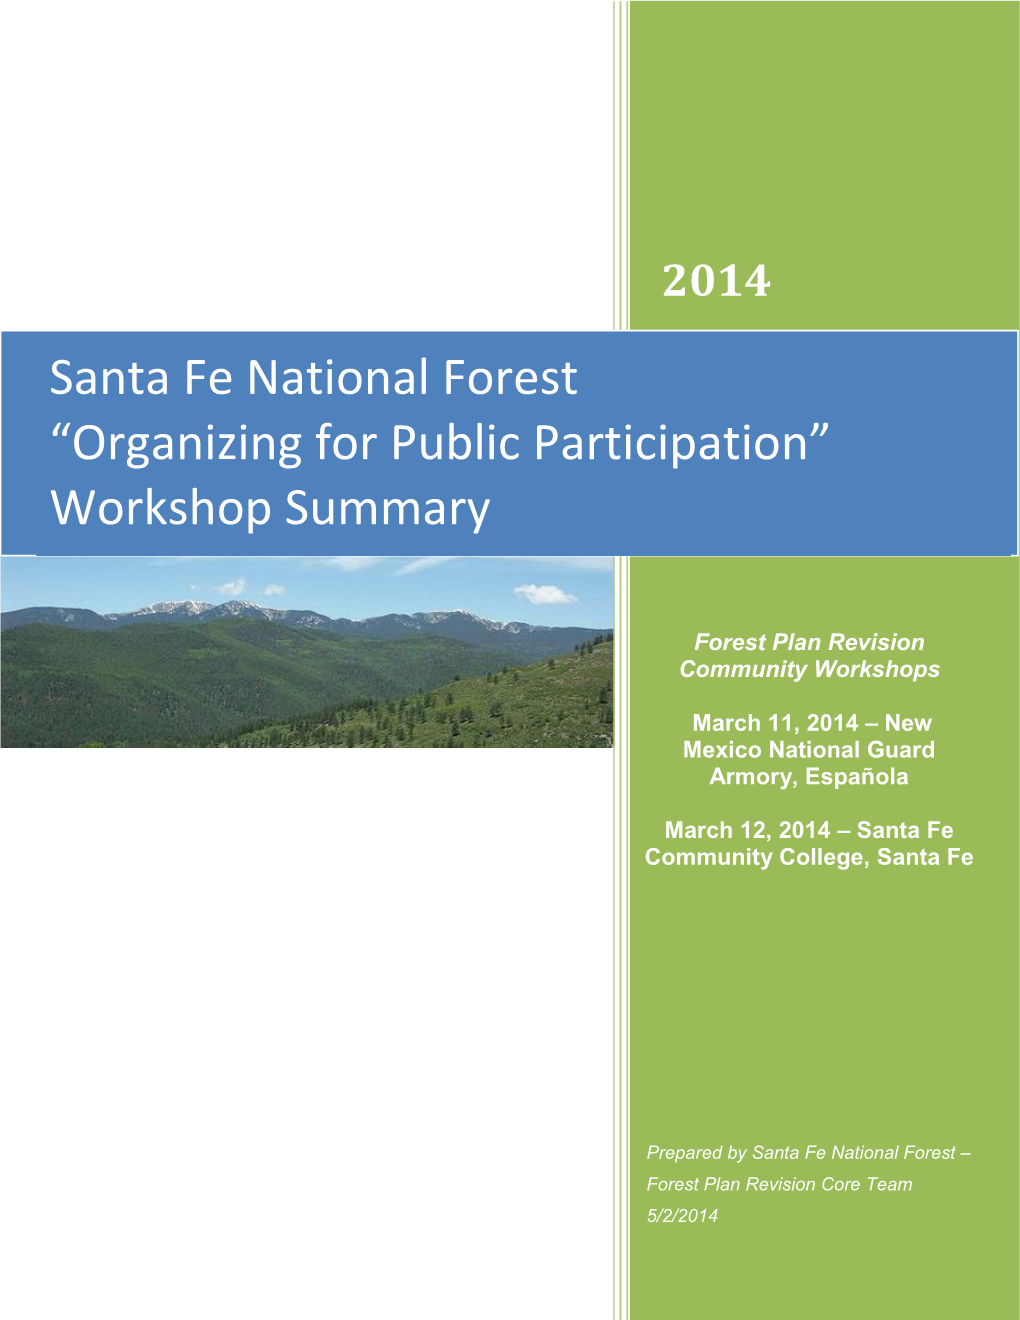 Santa Fe National Forest “Organizing for Public Participation” Workshop Summary